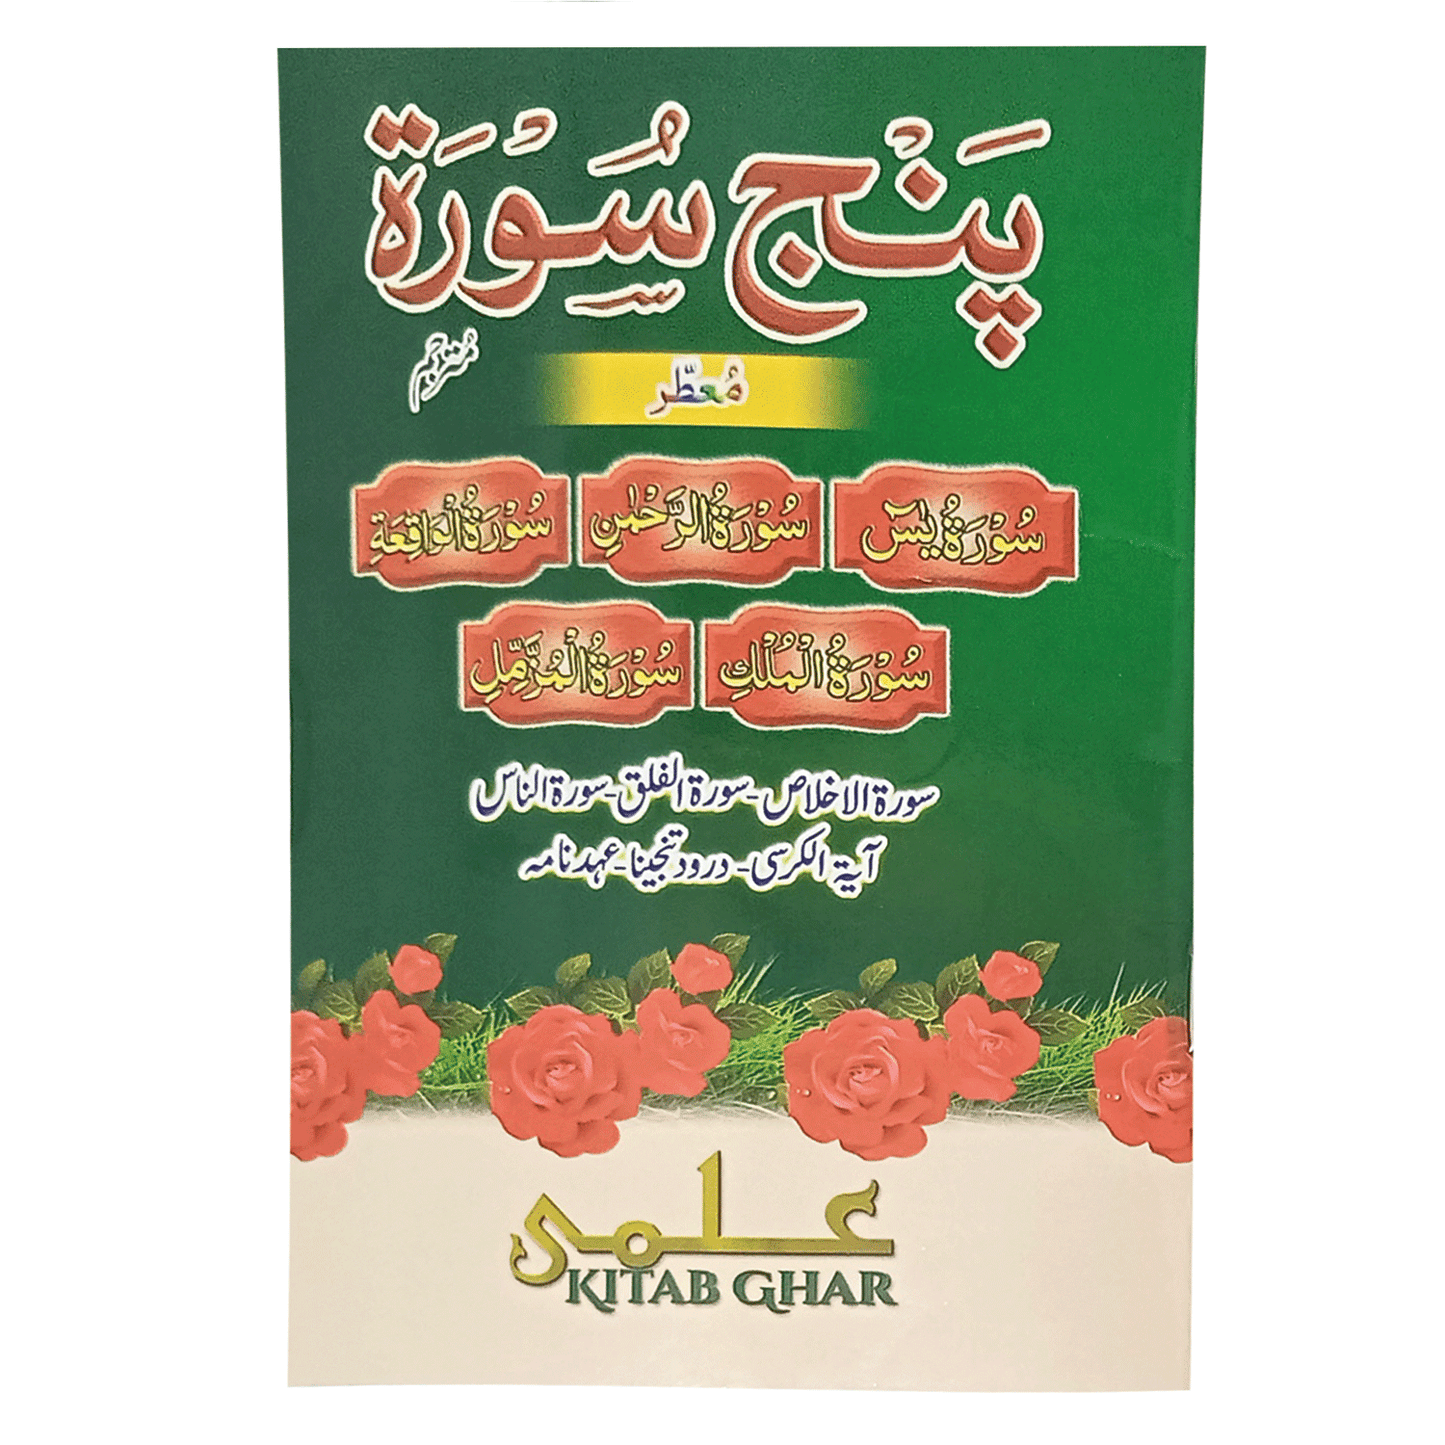 [IK89/M] Panj Surah (With Urdu Translation)